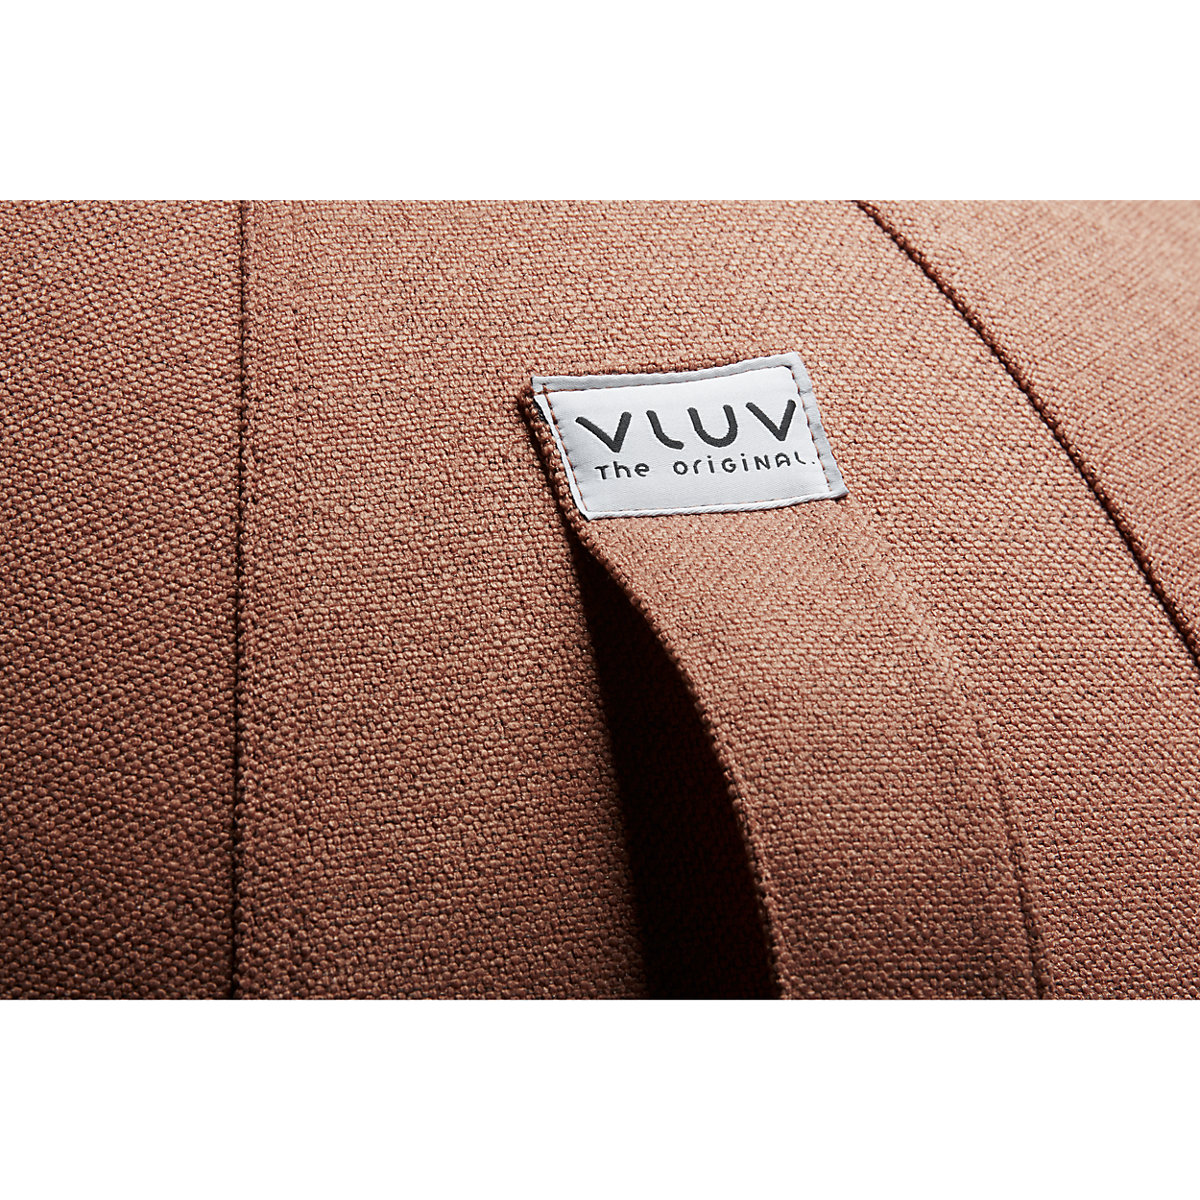 Piłka do siedzenia SOVA – VLUV (Zdjęcie produktu 2)-1